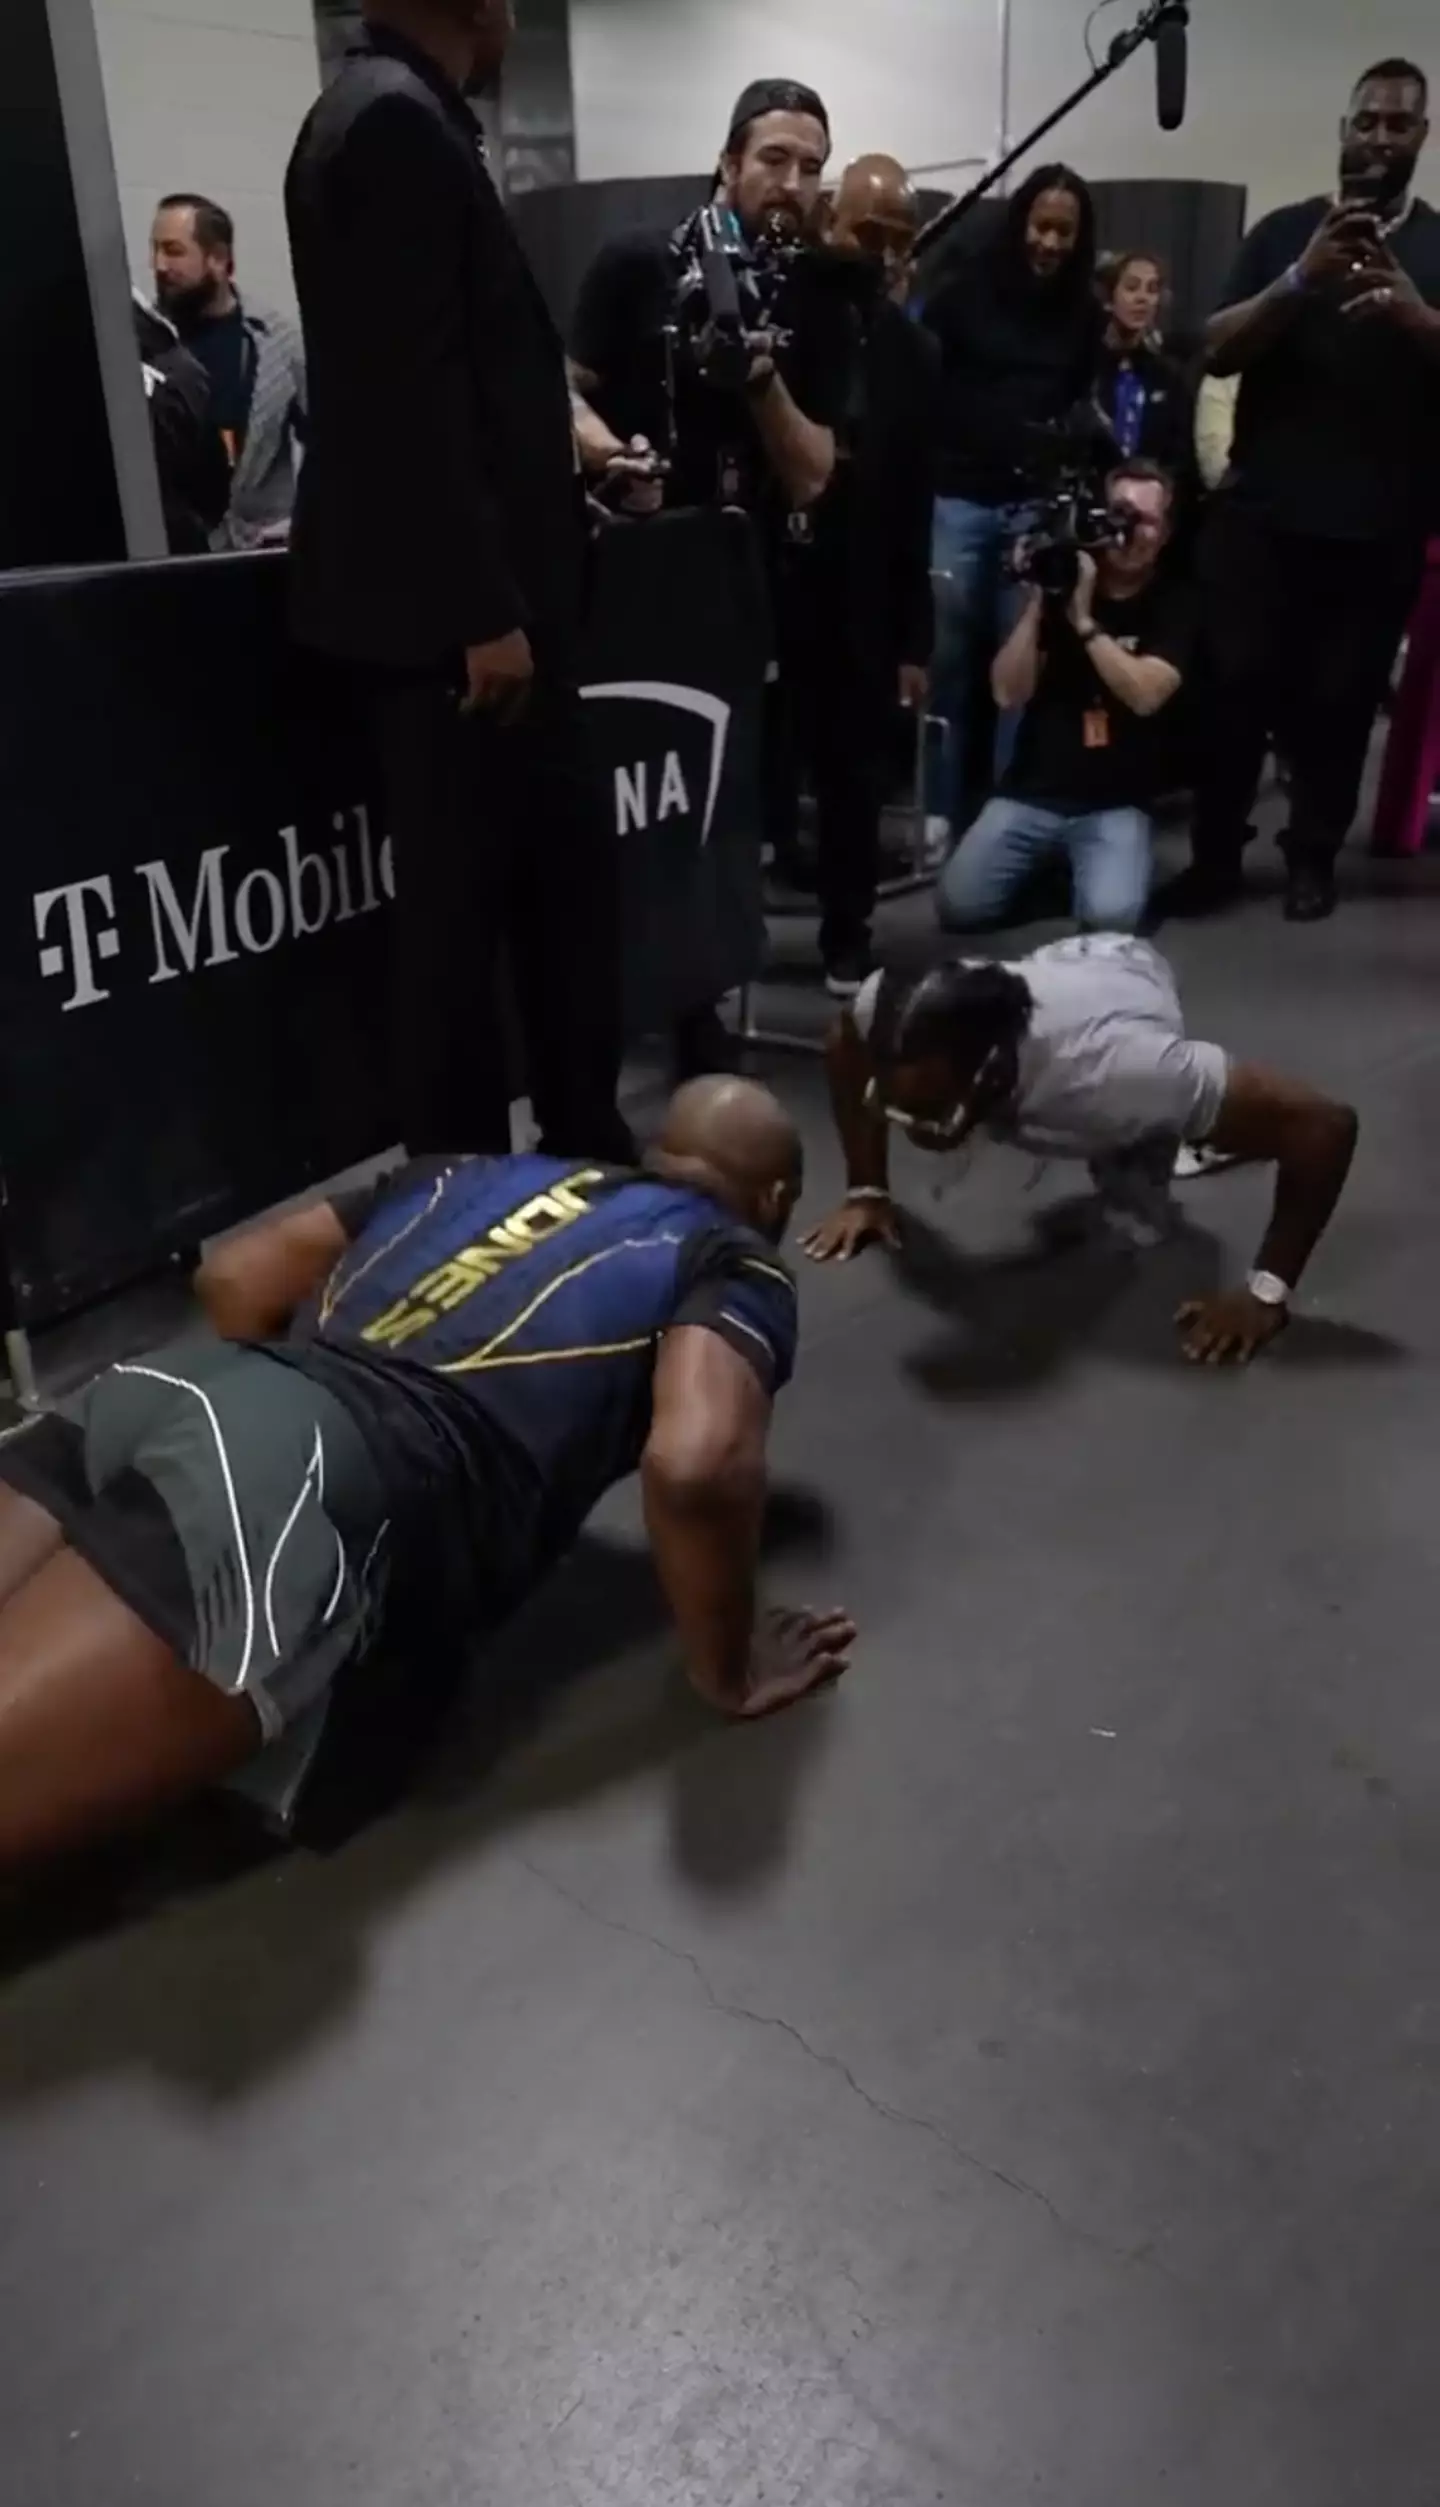 Clark vs Jones in the push-up contest.